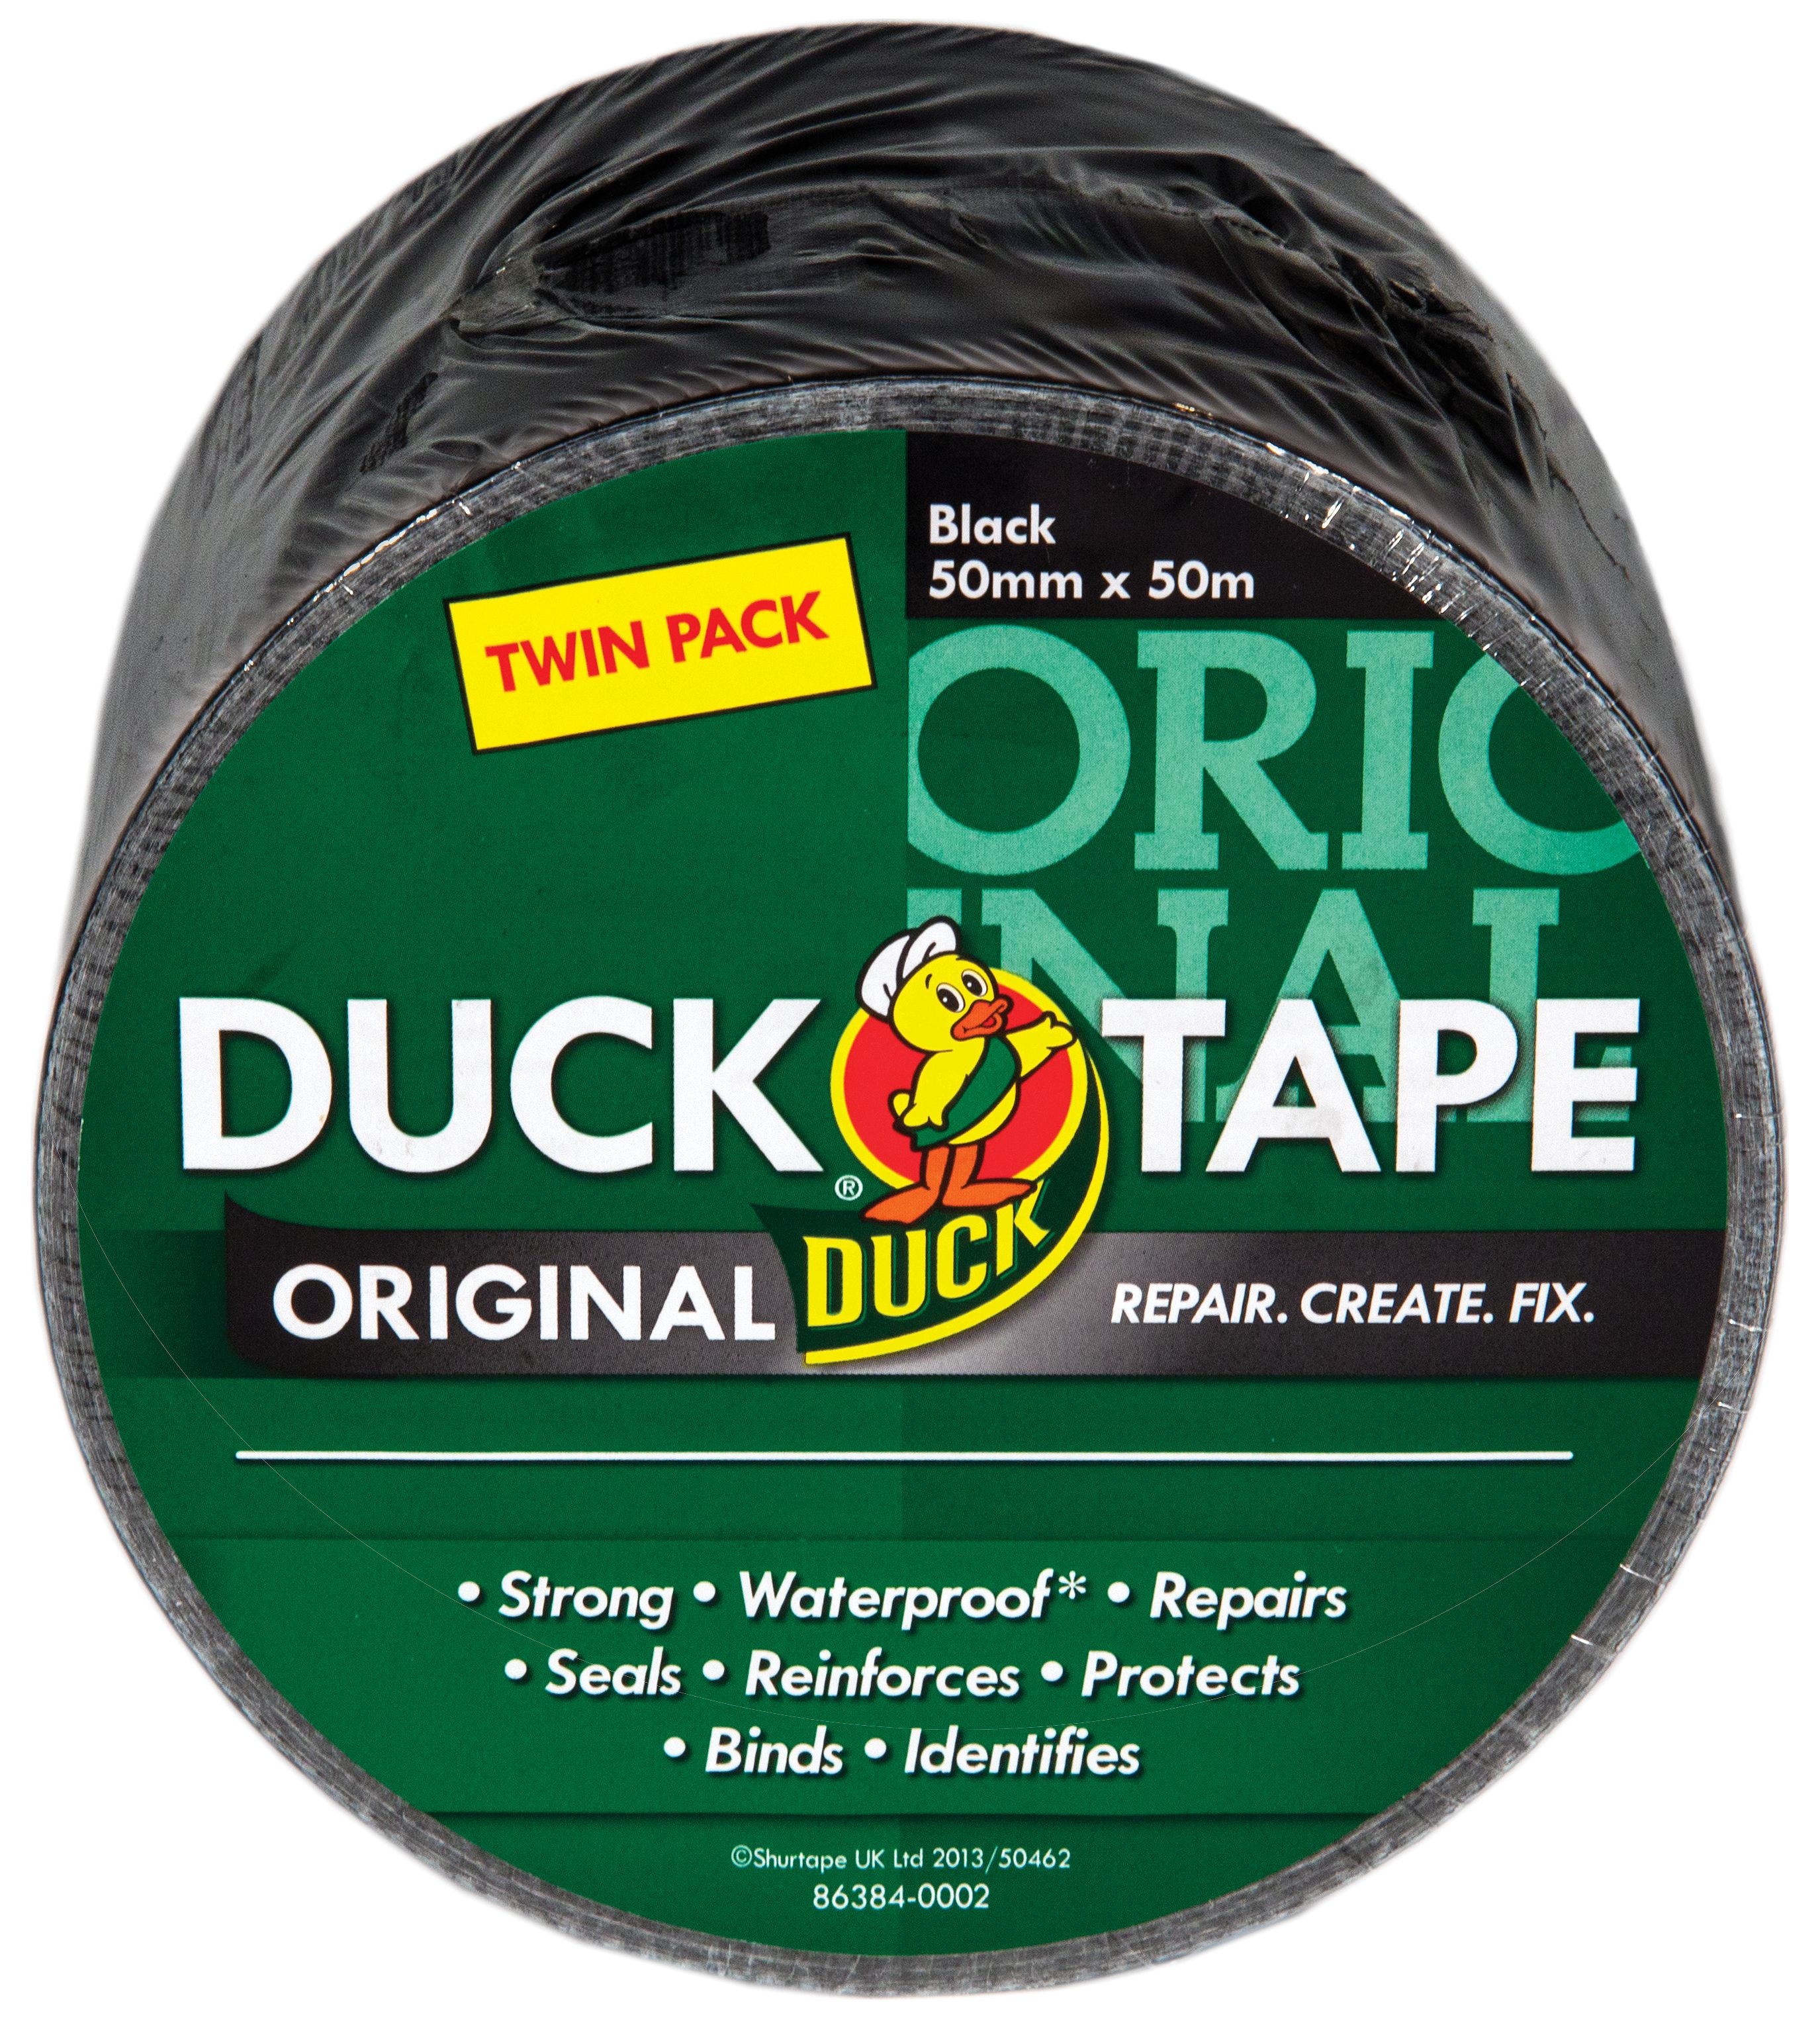 Duck Tape Original Black 50mm x 25m Twin Pack